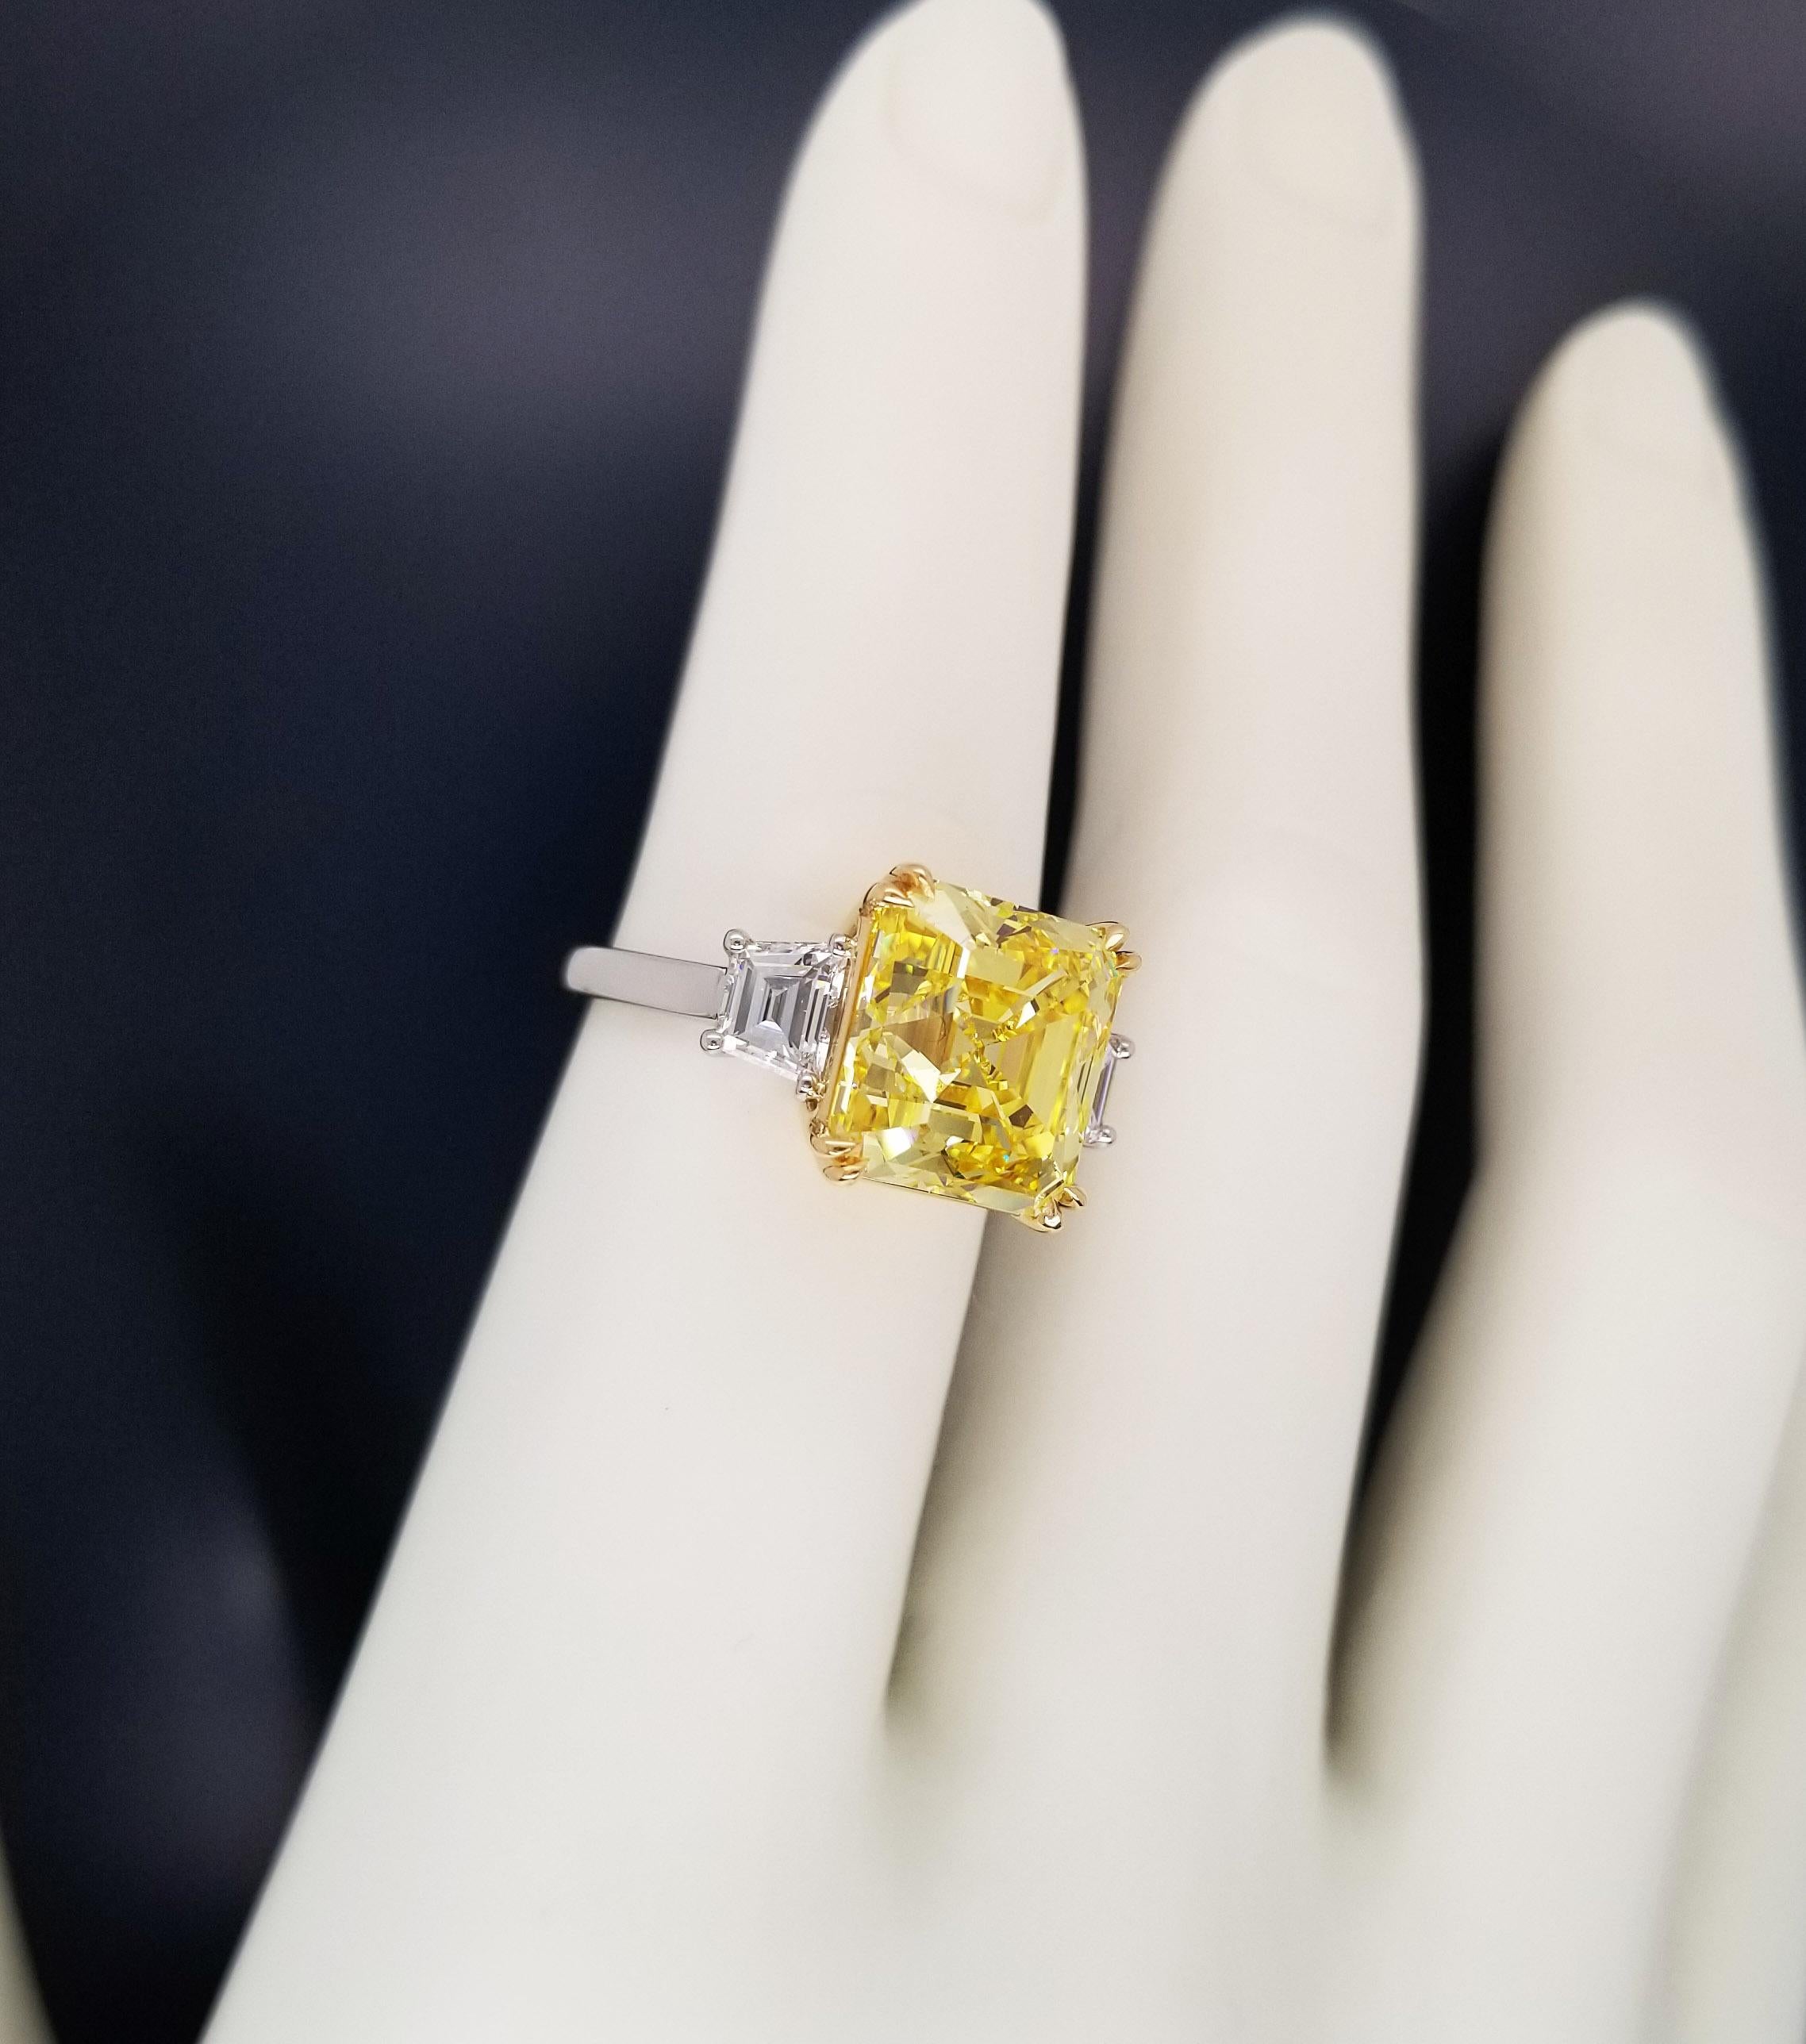 Scarselli 6 Carat Fancy Vivid Yellow Emerald Cut Diamond Ring in Platinum 2